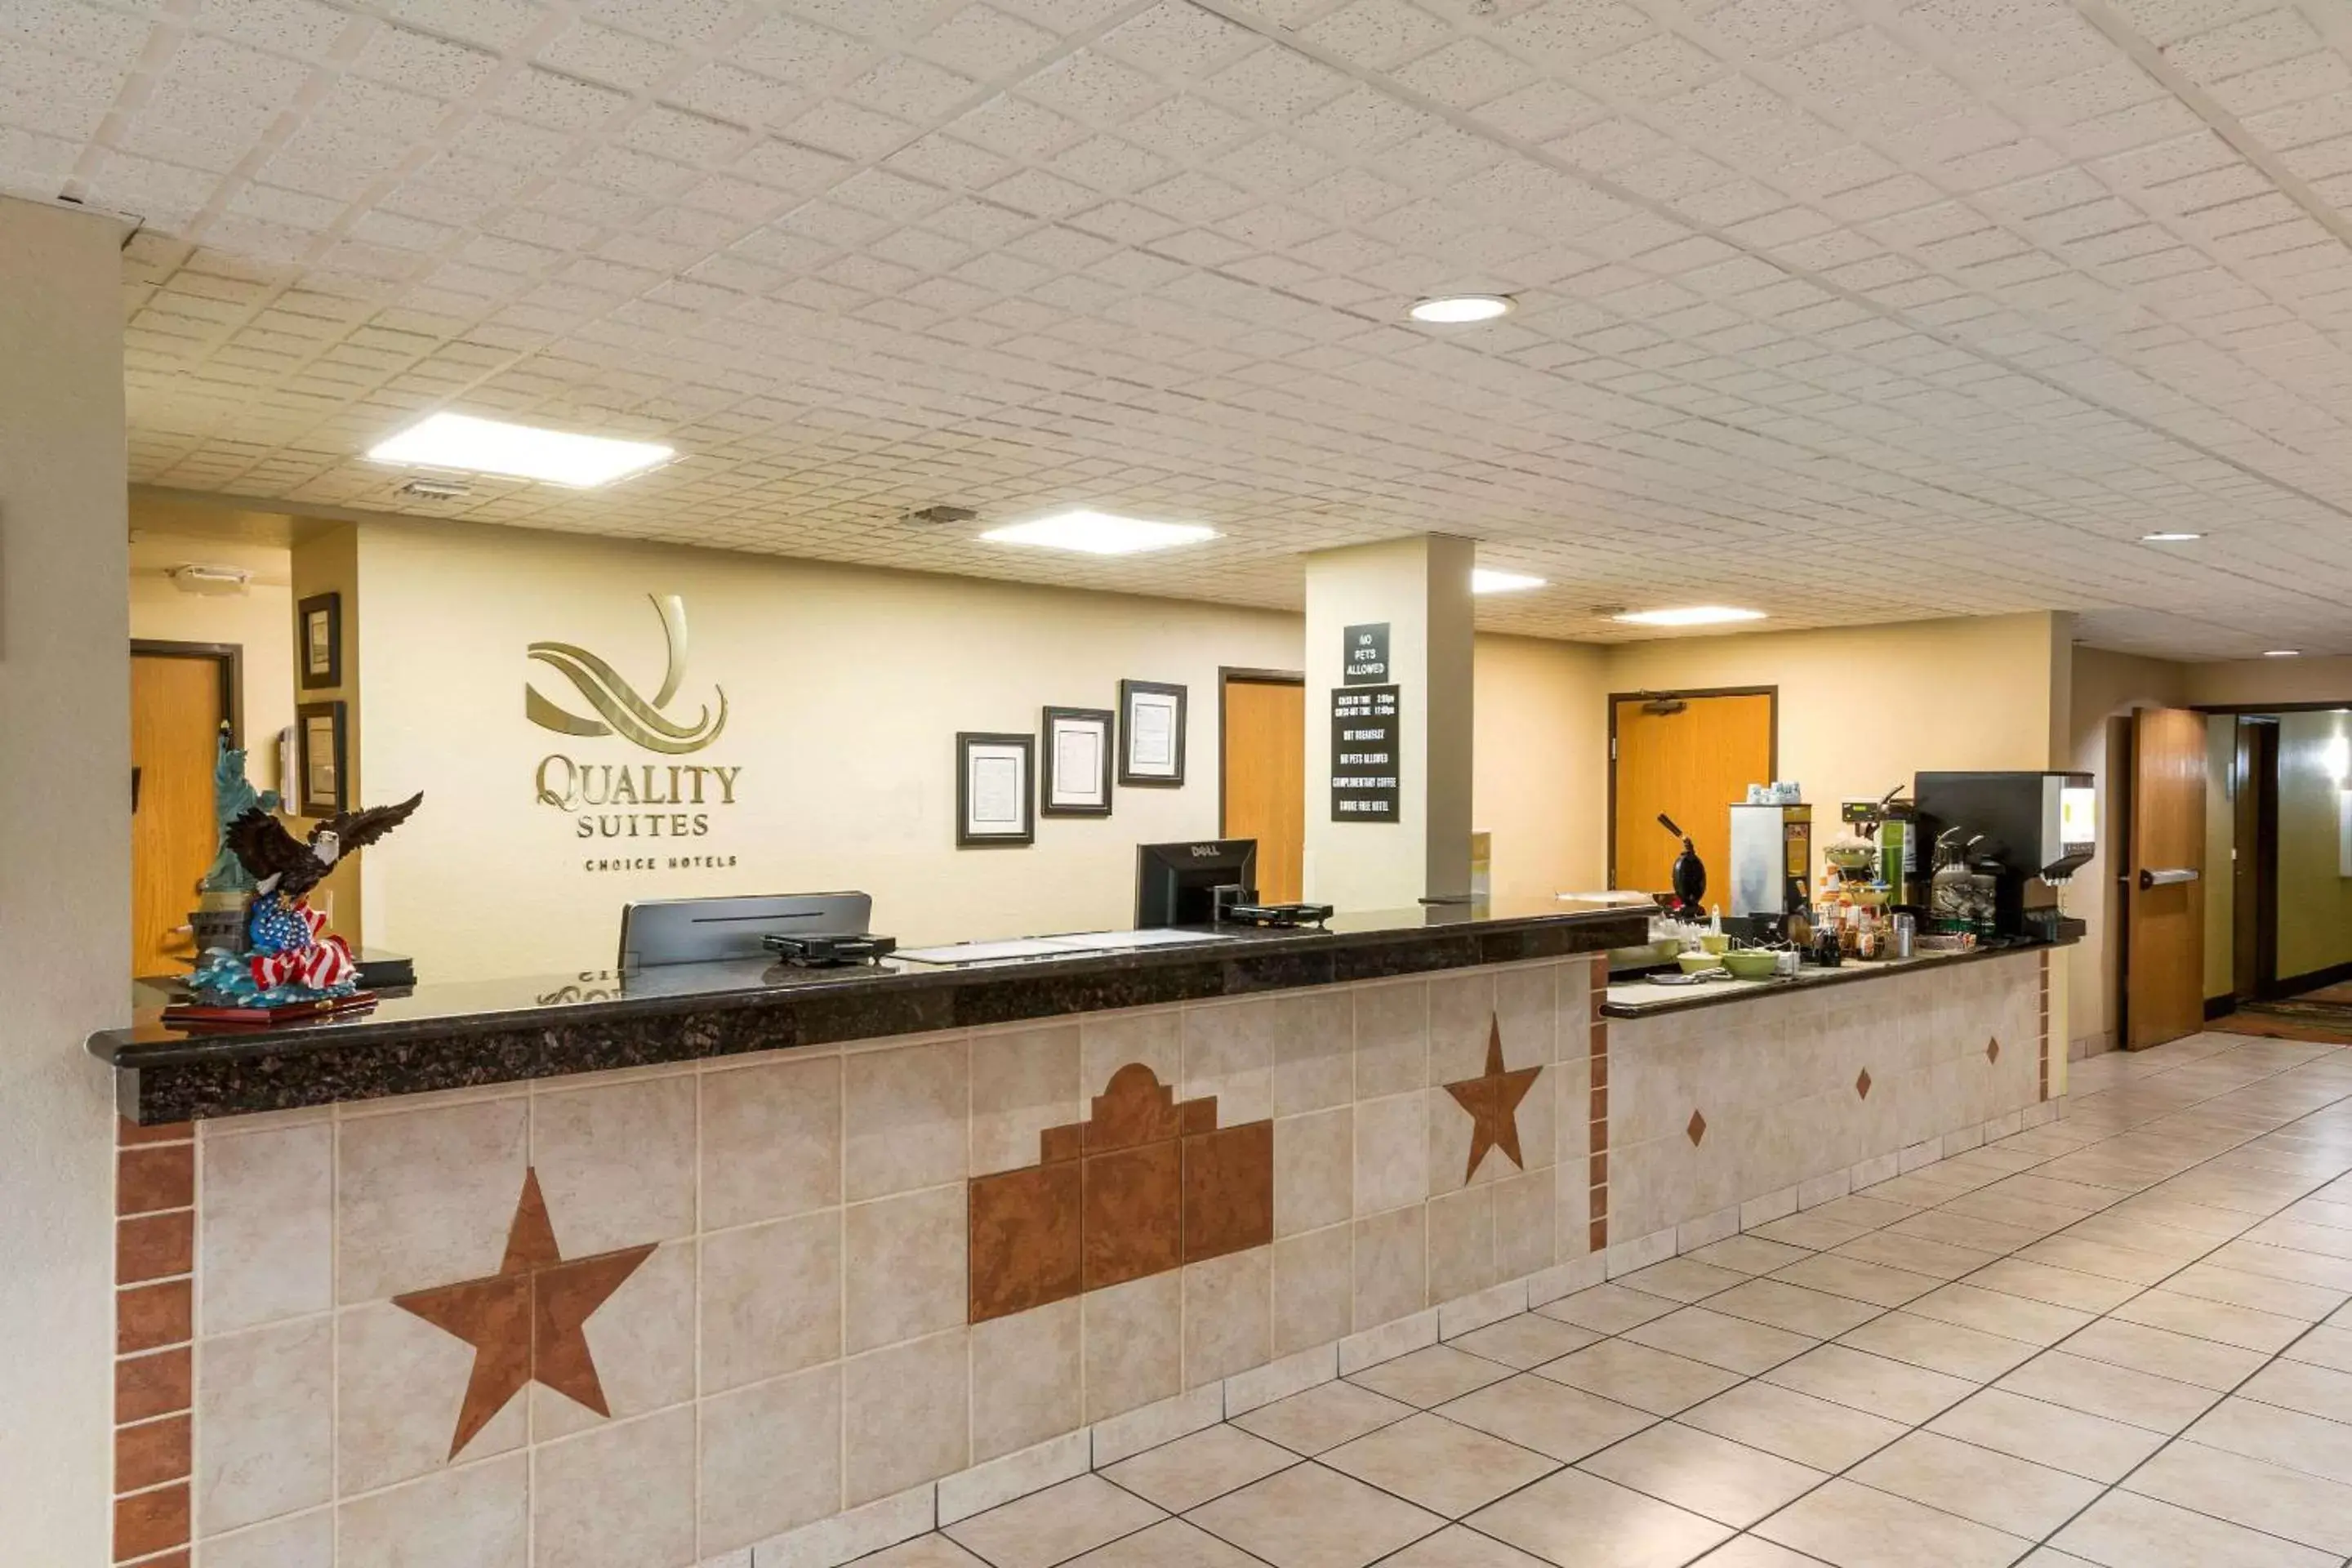 Lobby or reception in Quality Suites San Antonio